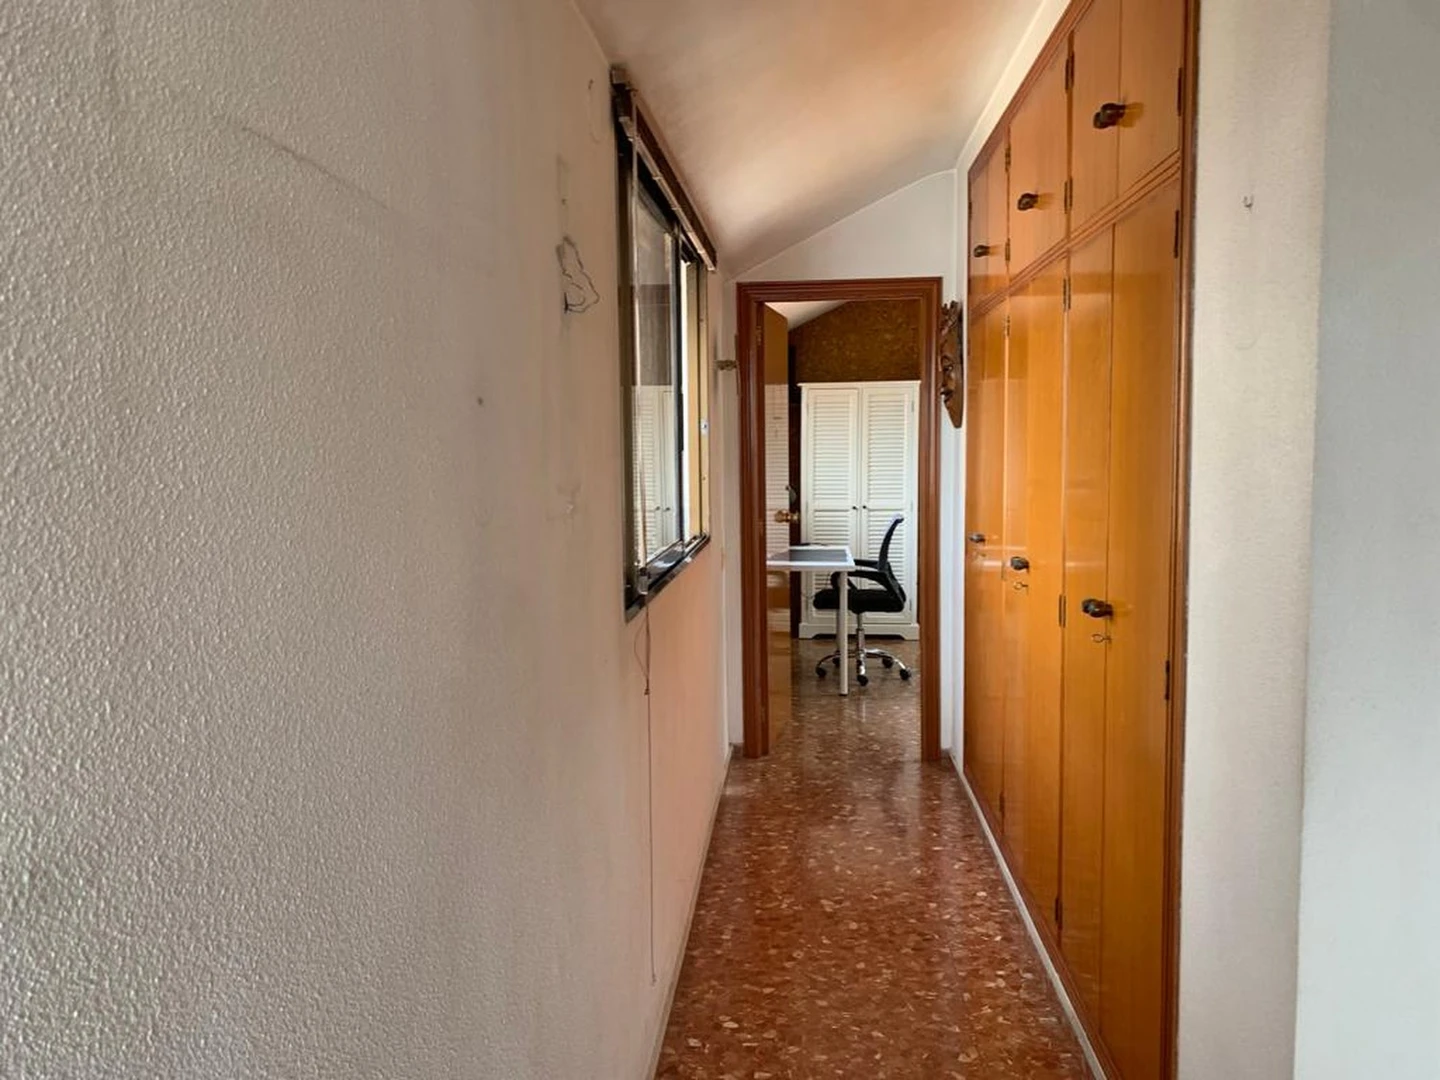 Picture of Private room at Av. del Dr. Clarà, 40, 6o c, 12002 Castelló de la Plana, Castelló, Spain